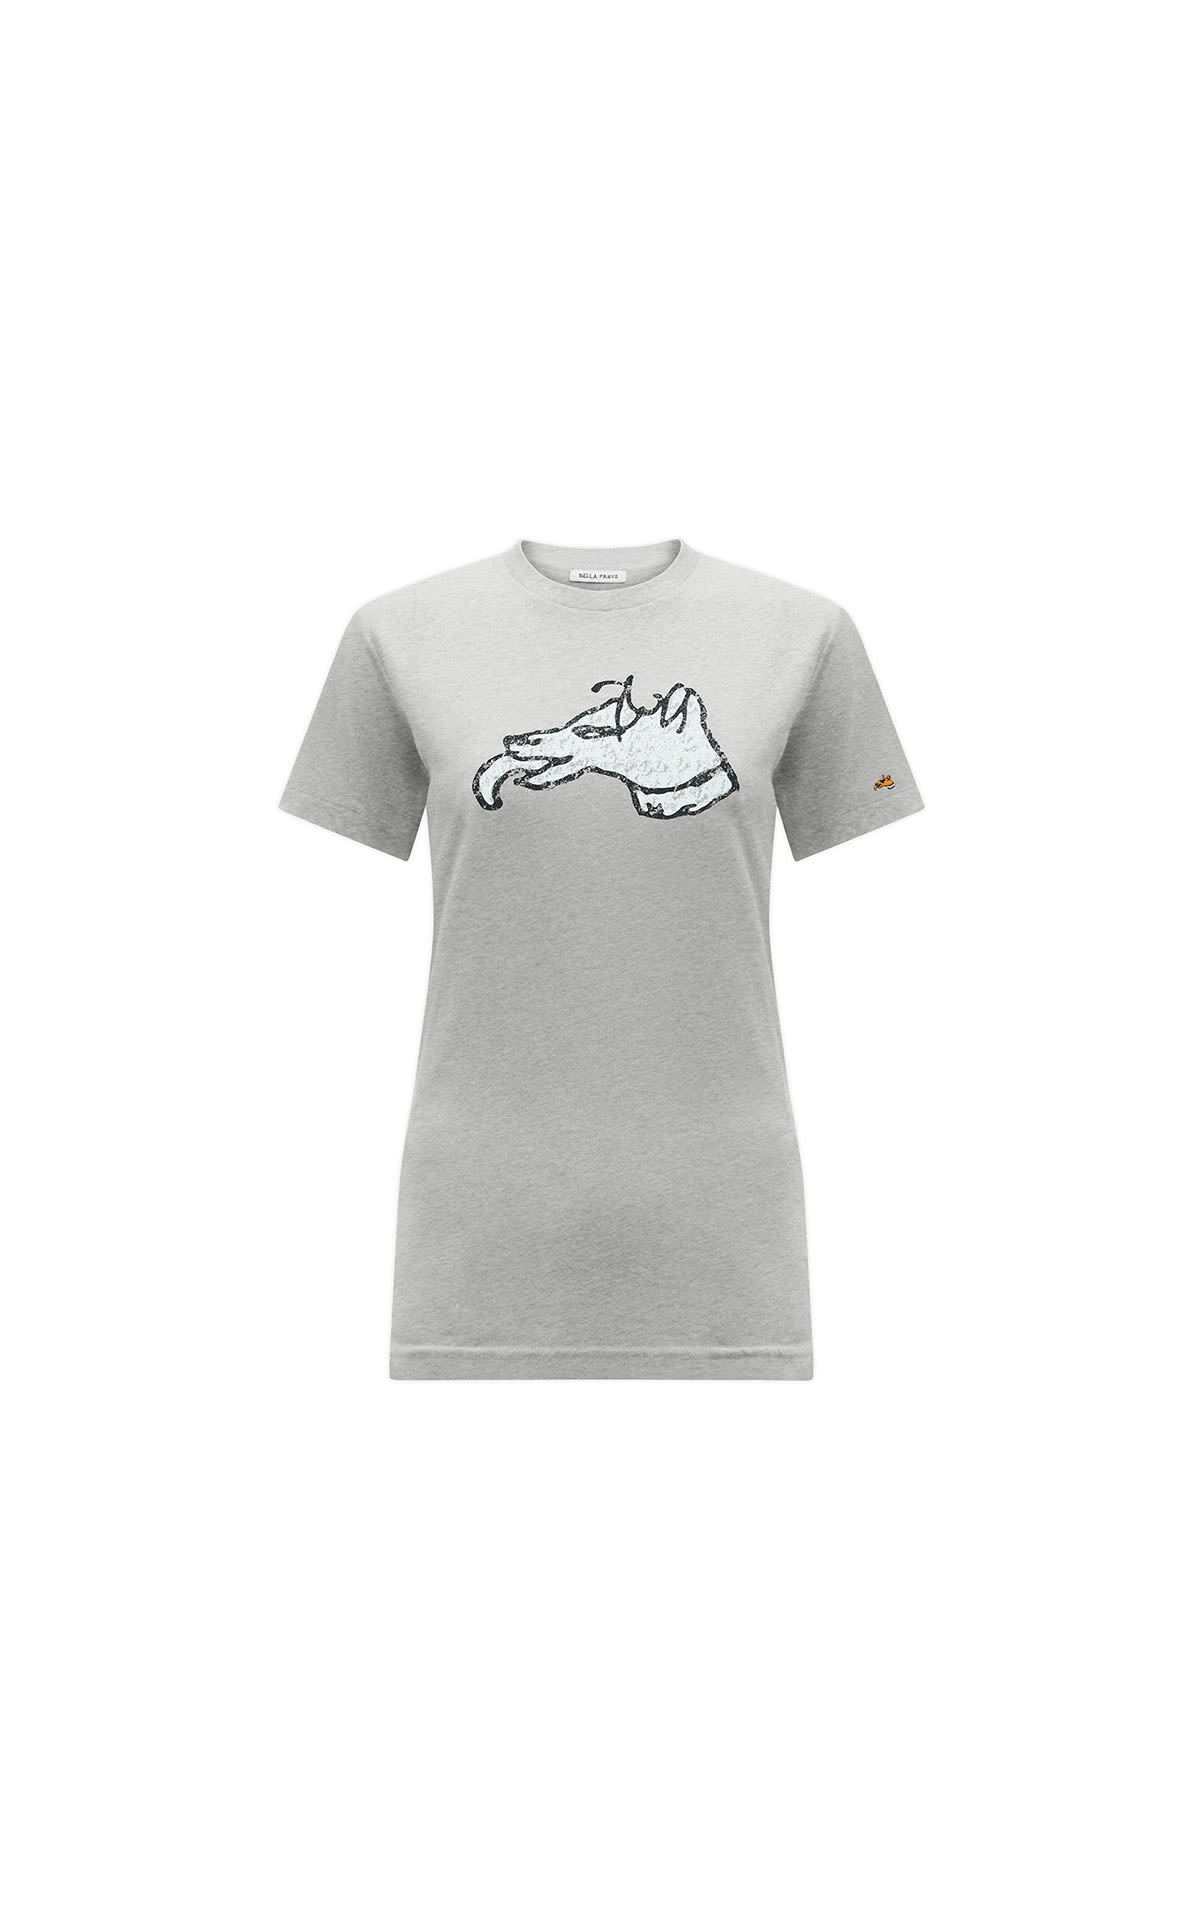 Bella Freud Colour block dog t-shirt grey marl from Bicester Village